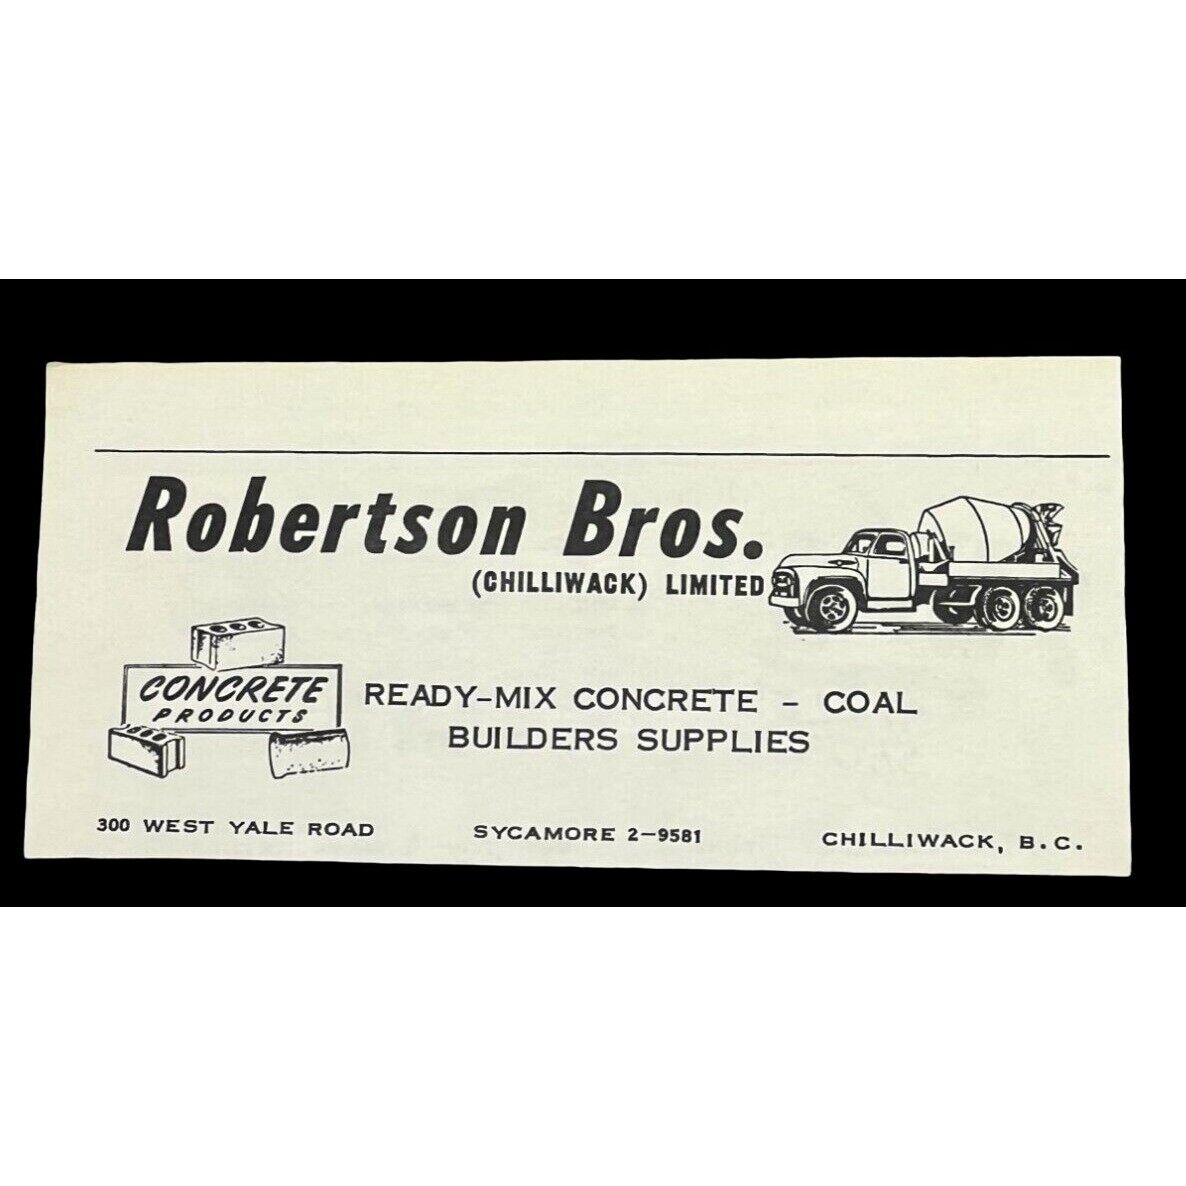 Robertson Bros Concrete Products Vtg Print Ad Chilliwack B.C. Construction 1950s